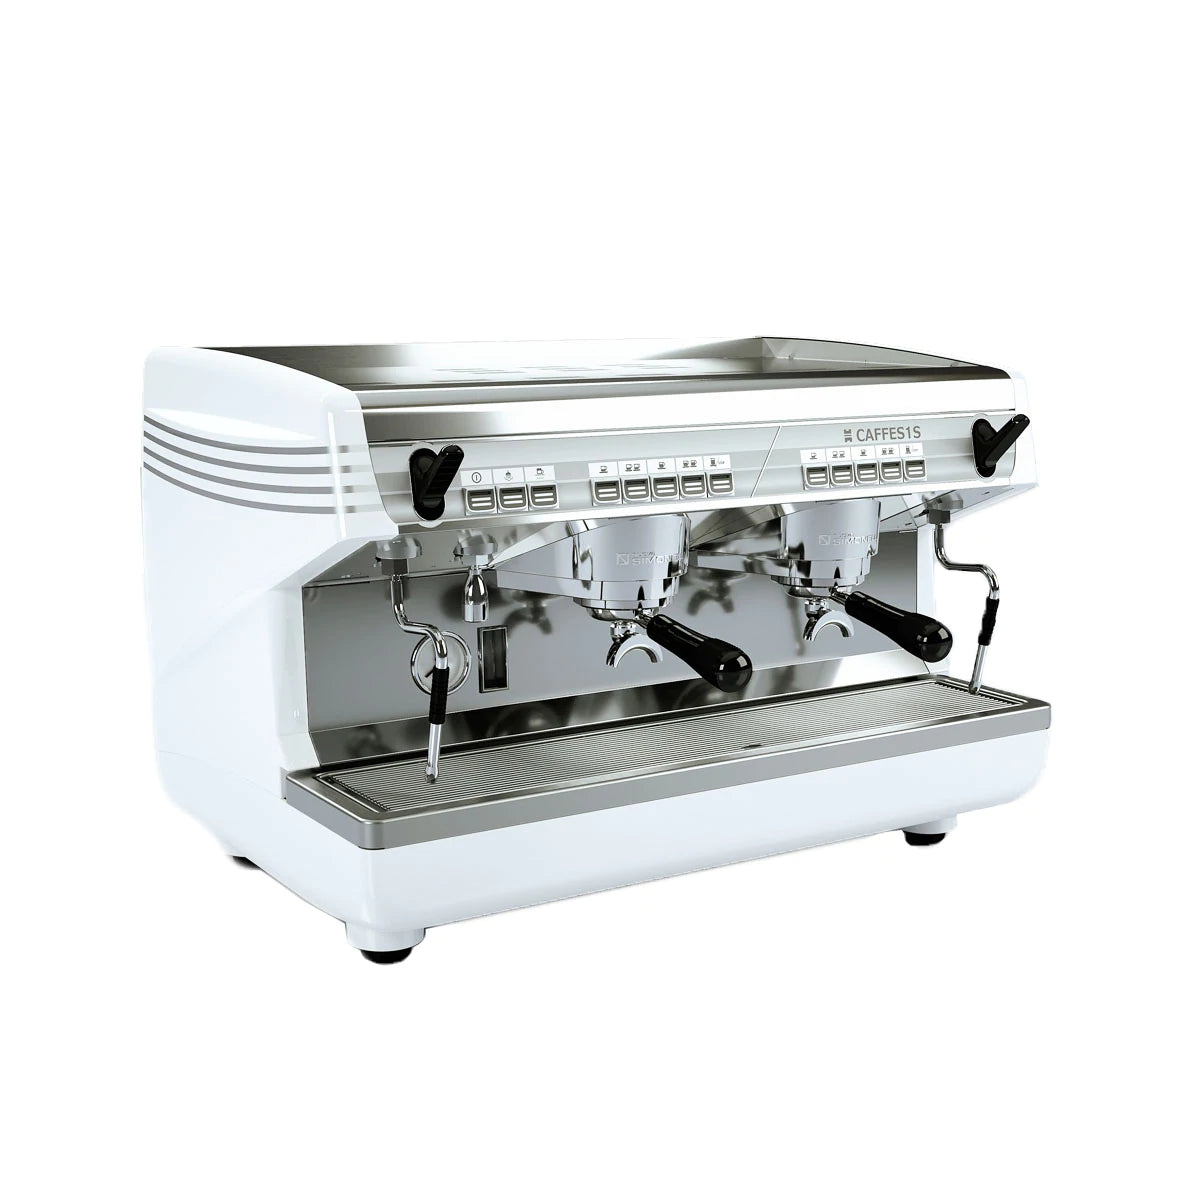 Nuova Simonelli Caffes1s Commercial Coffee Machine